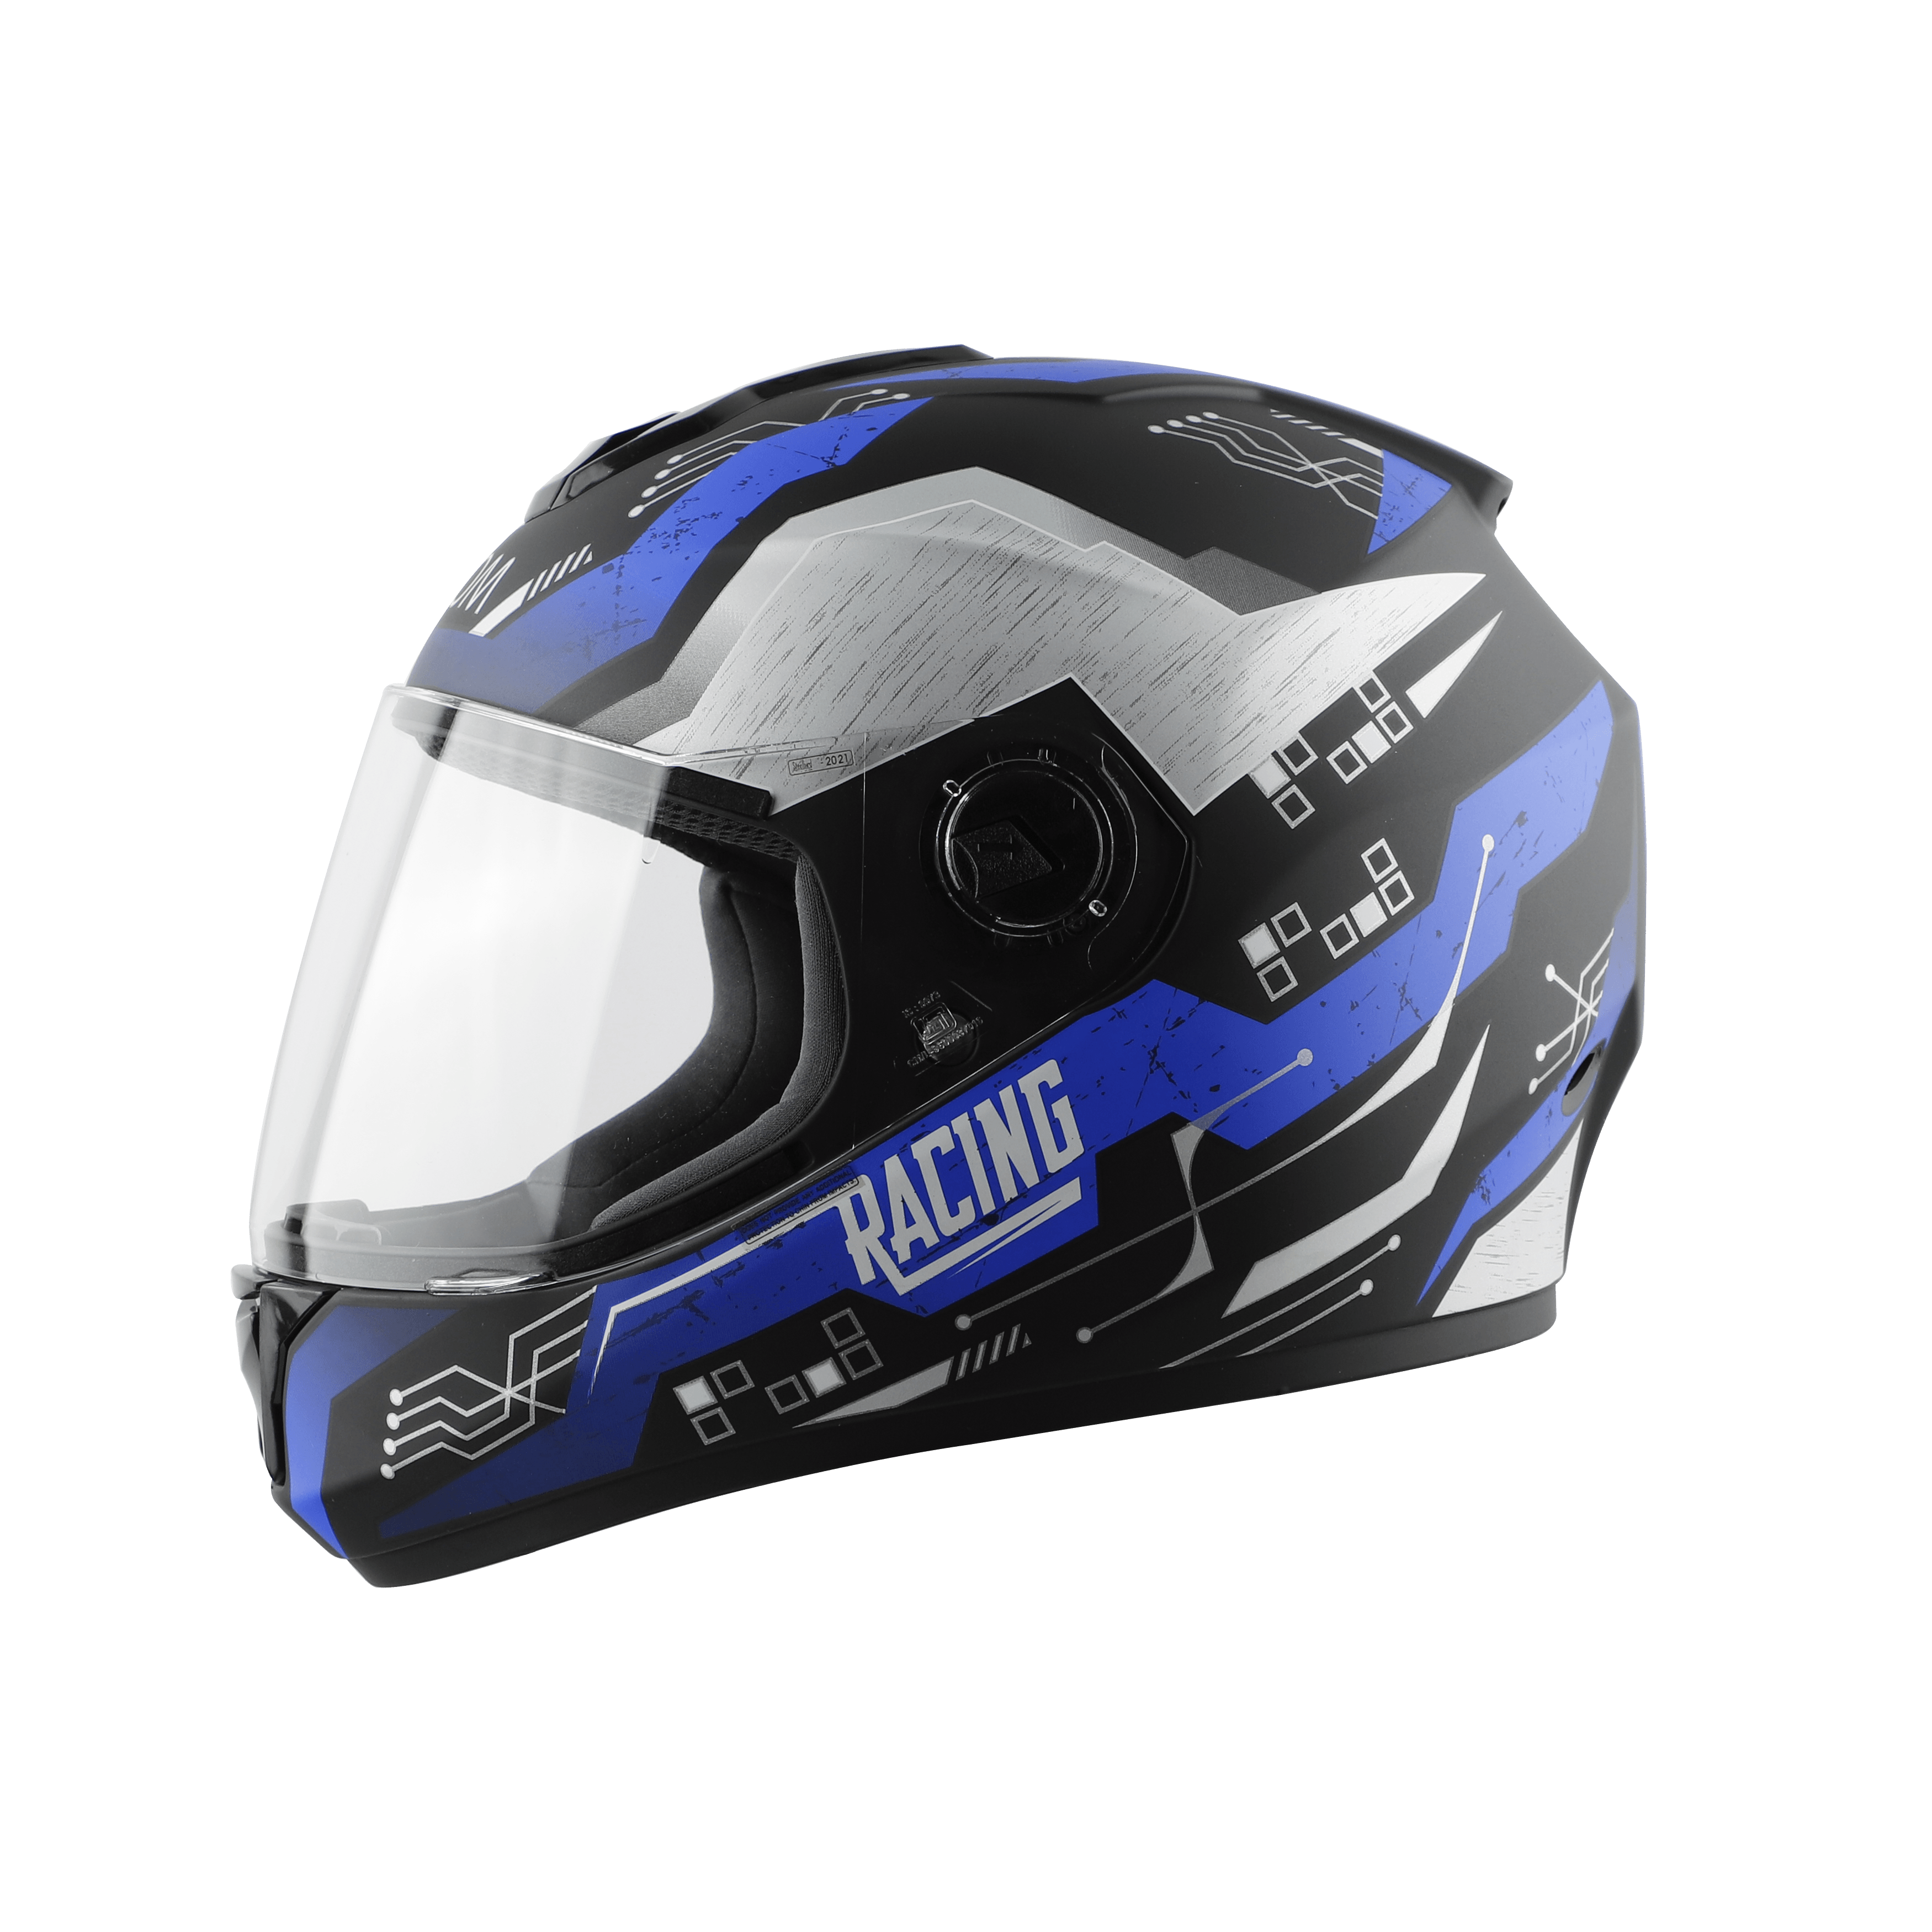 Steelbird  SBH-11 Zoom Racing Helmet with Plain Visor, (Glossy Black with Blue)